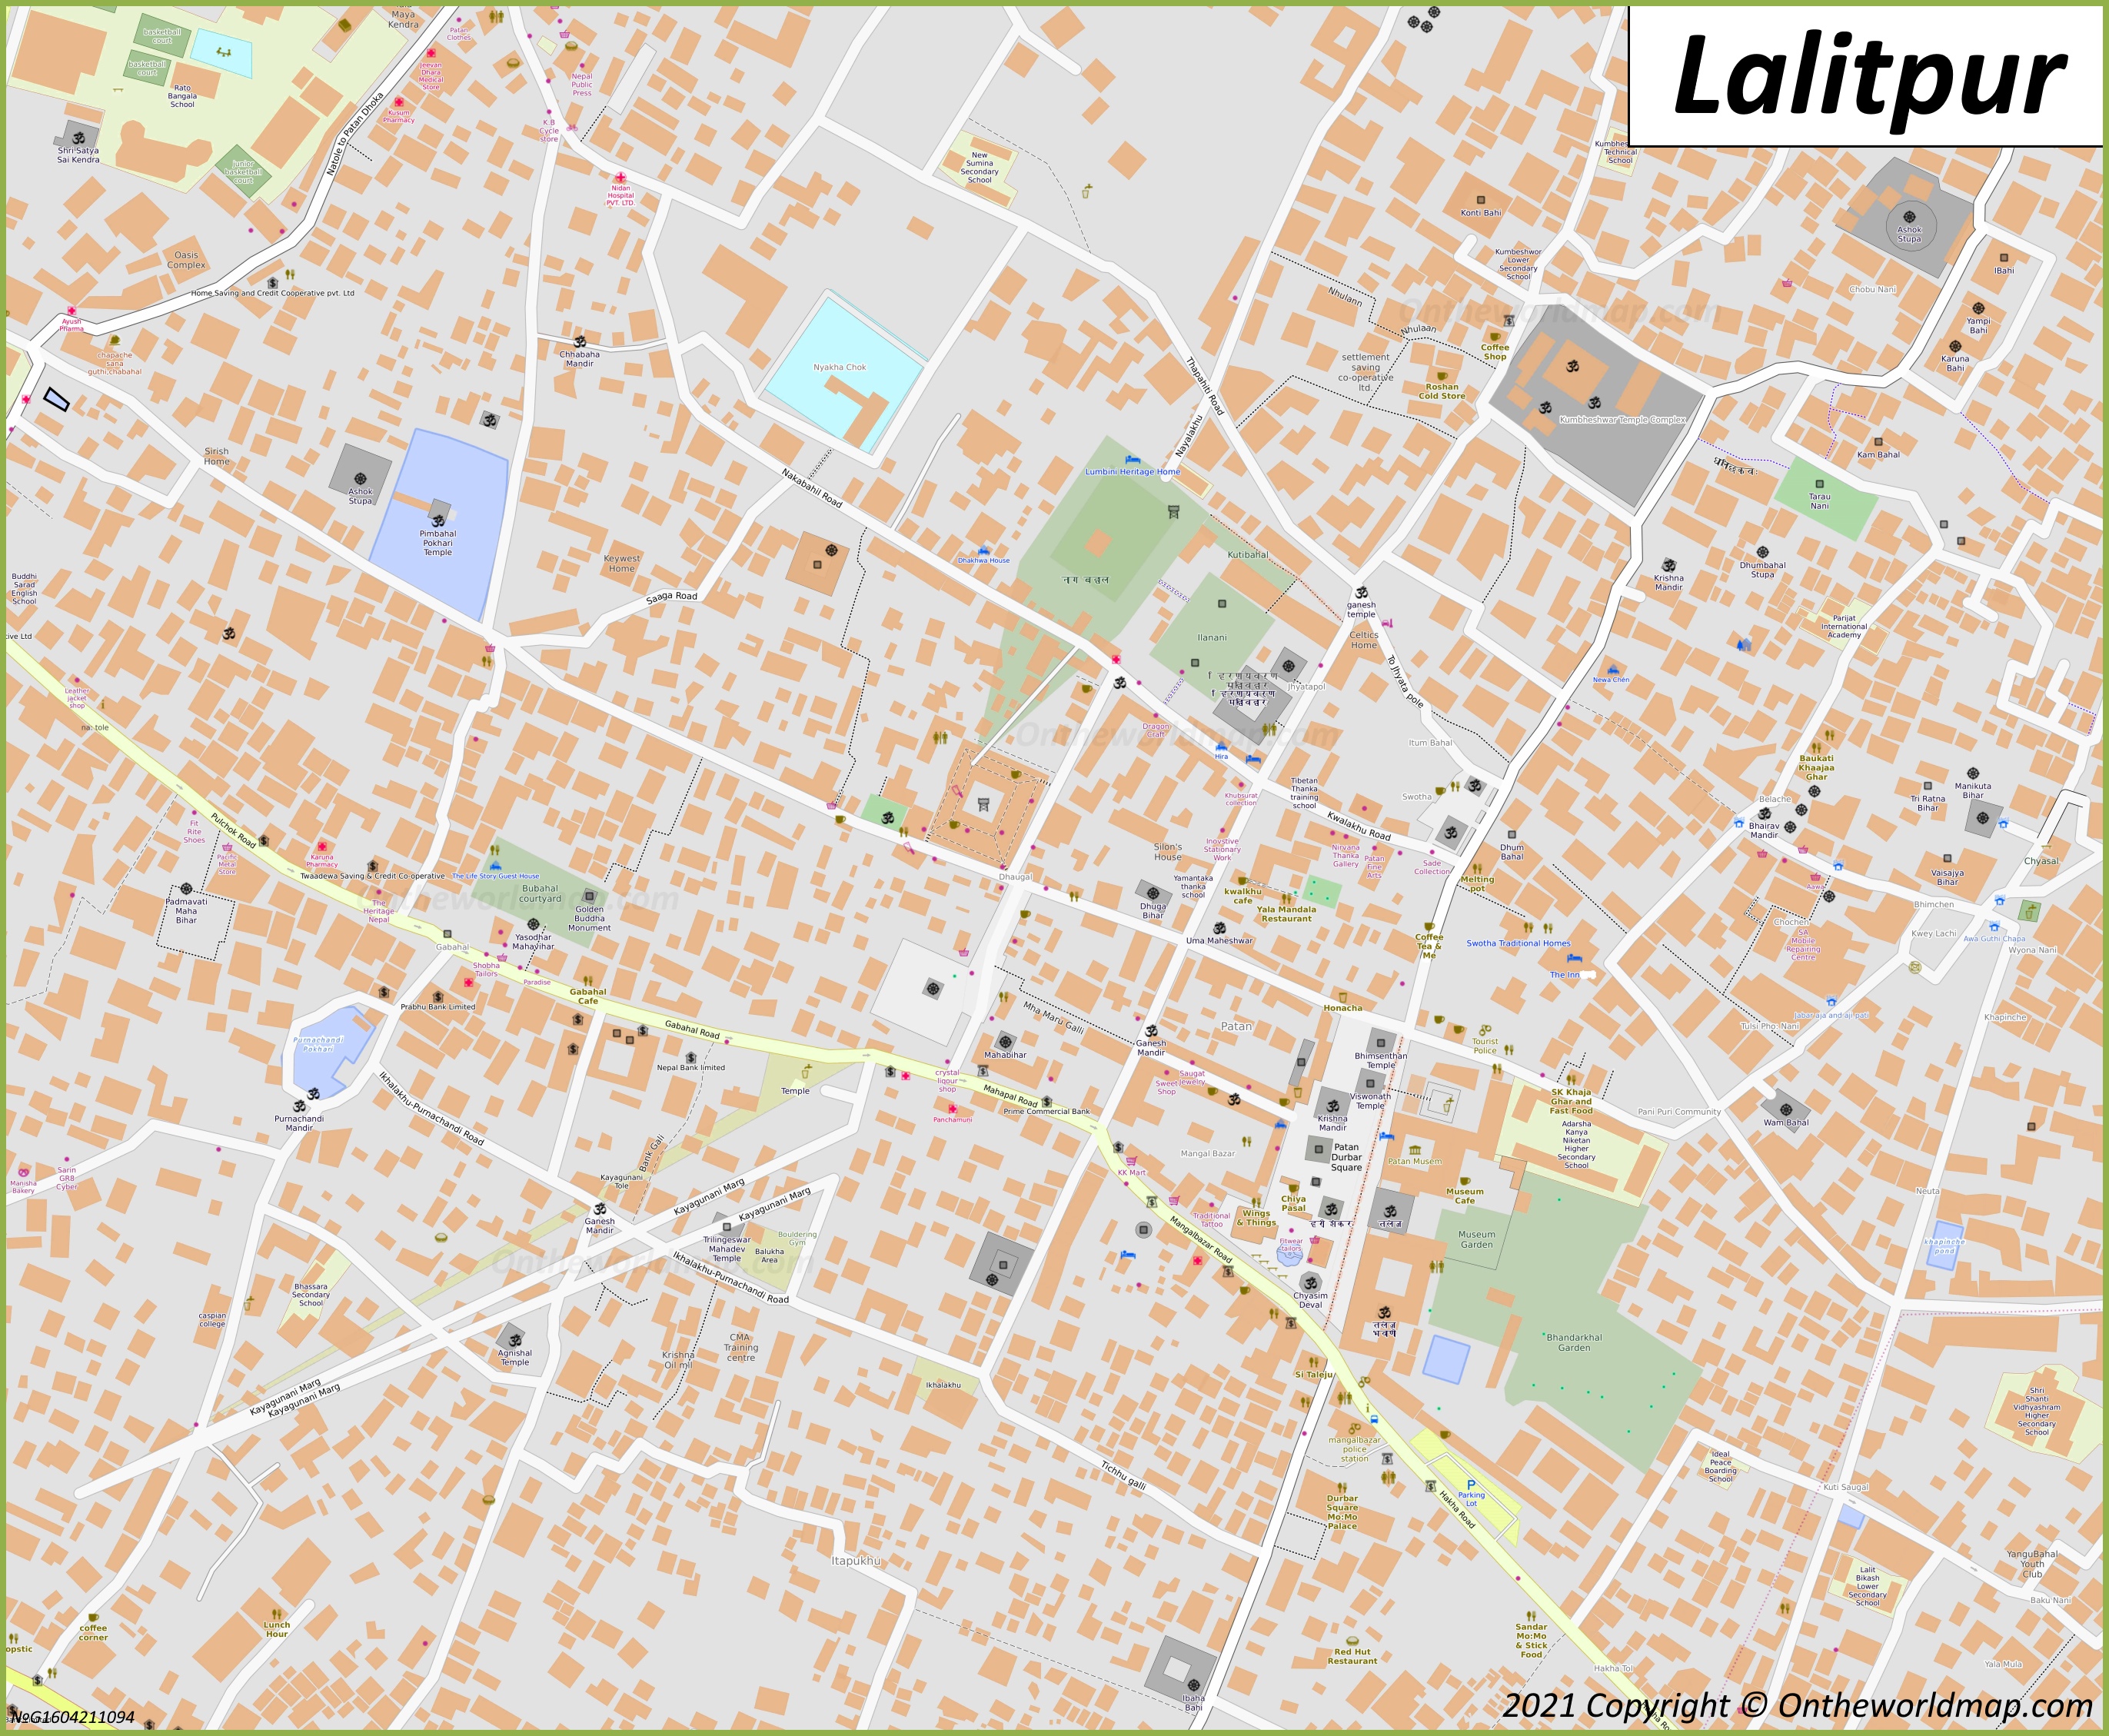 Lalitpur City Center Map